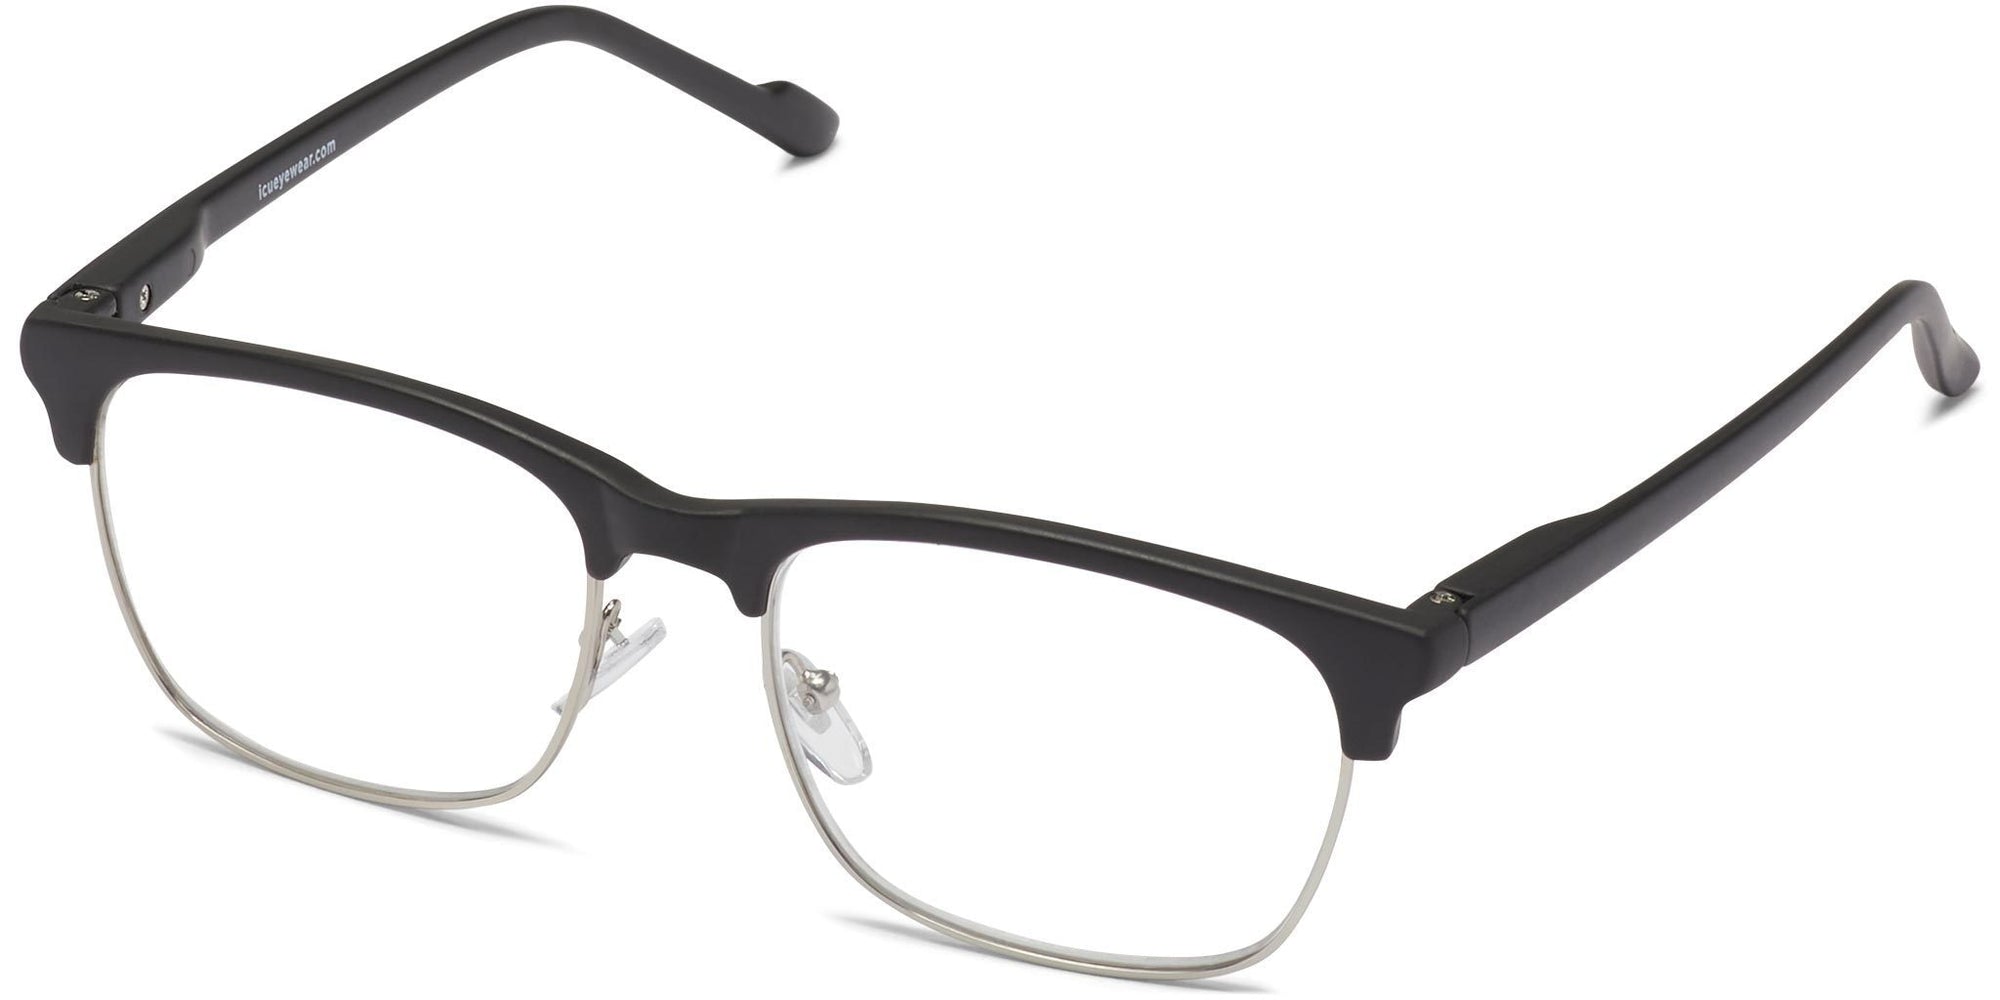 Rhodes - Black/Silver / 1.25 - Reading Glasses